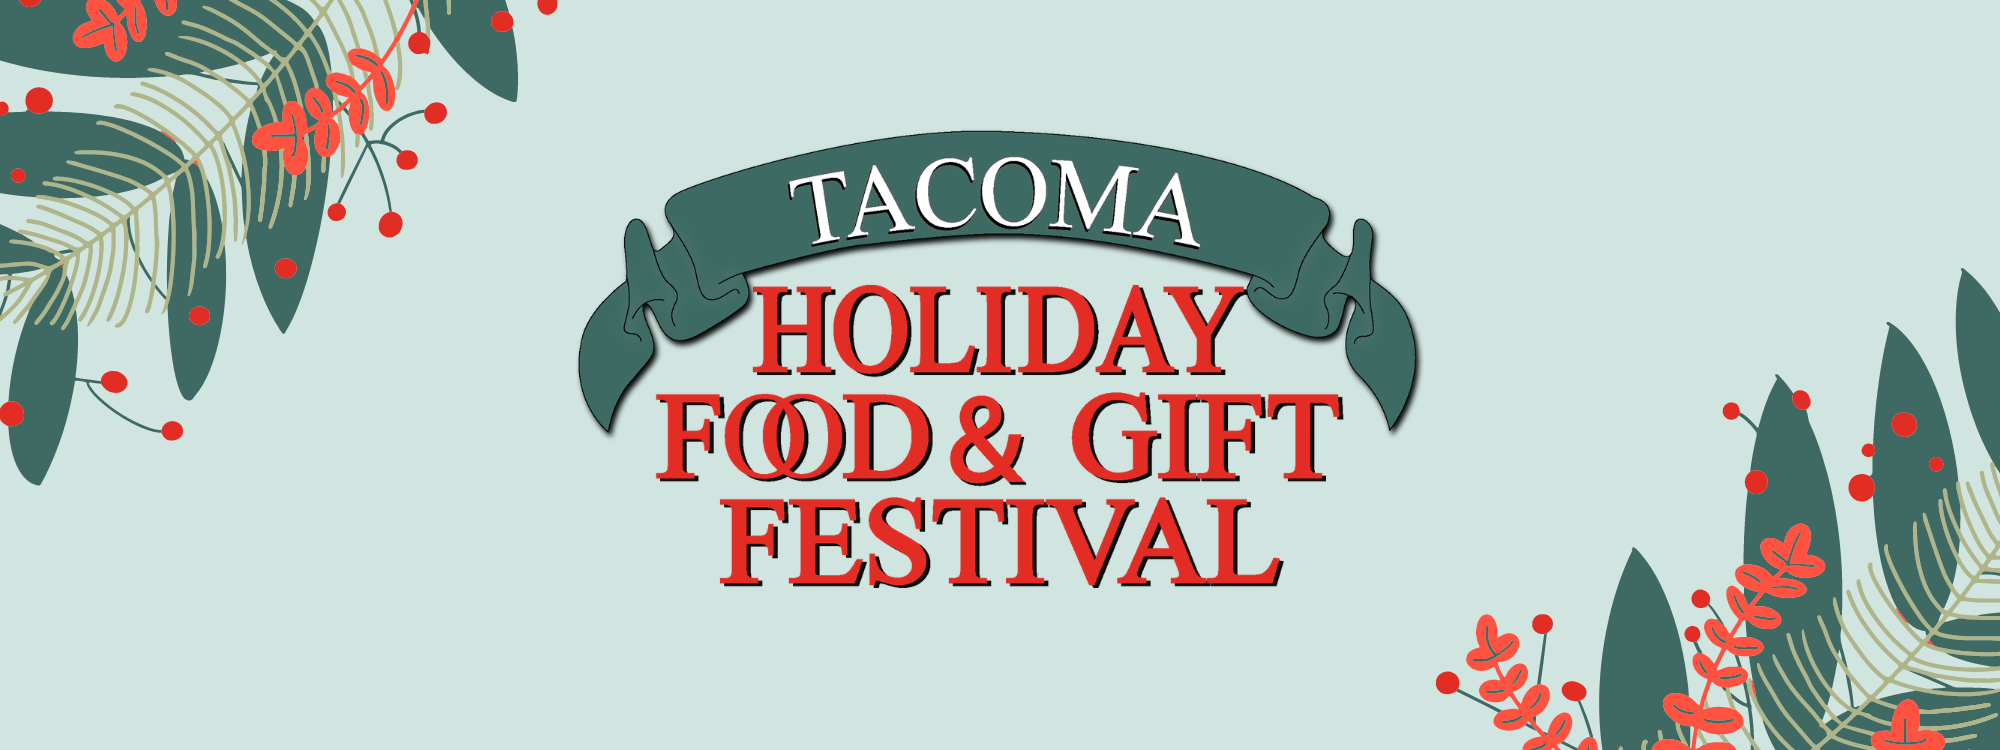 Tacoma Holiday Food & Gift Festival 